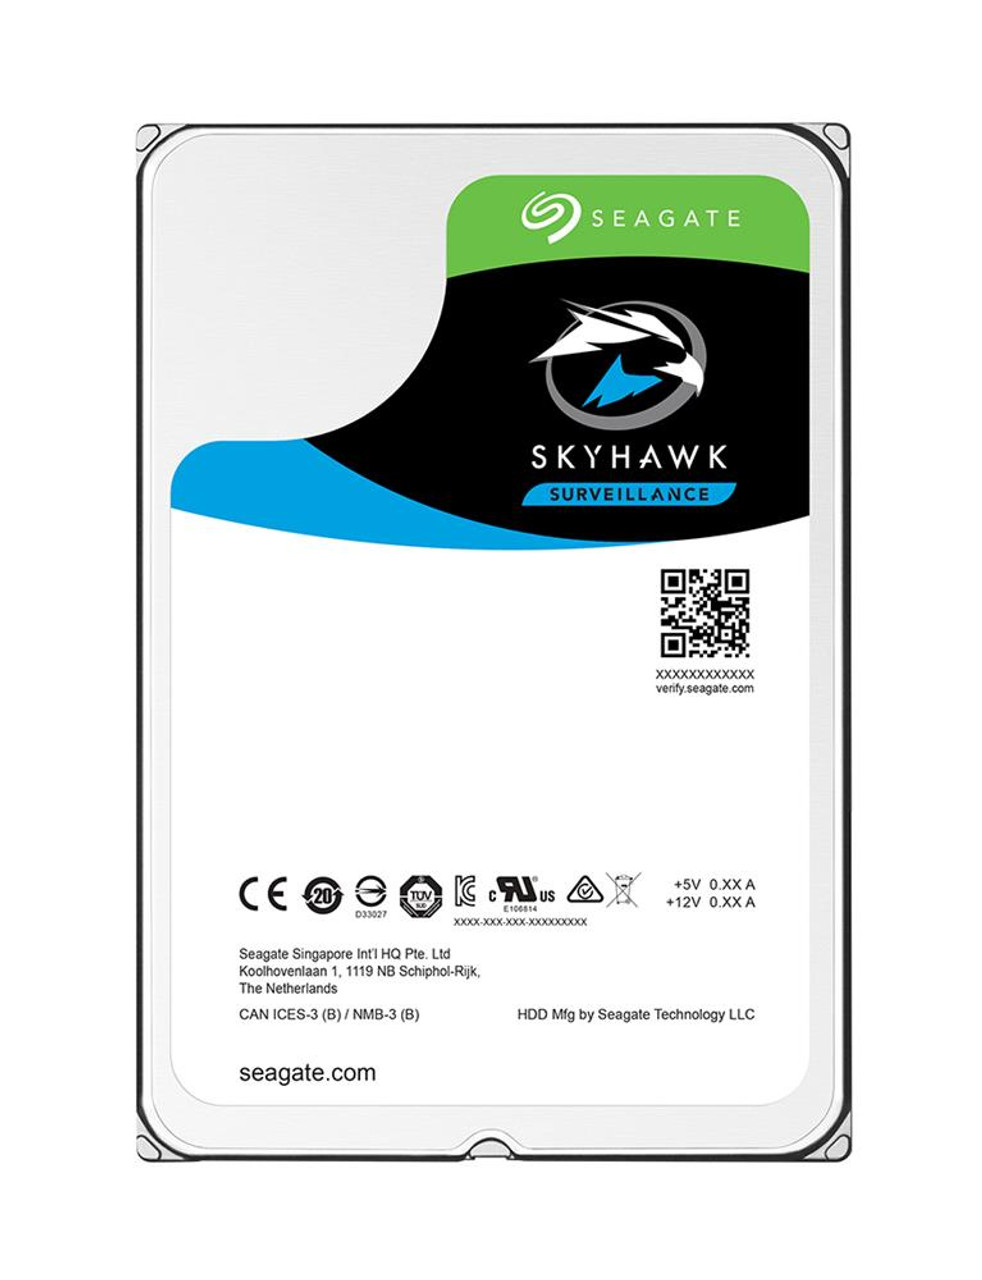 ST8000VXA022 Seagate SkyHawk 8TB 7200RPM SATA 6Gbps 256MB Cache 3.5-inch Internal Hard Drive